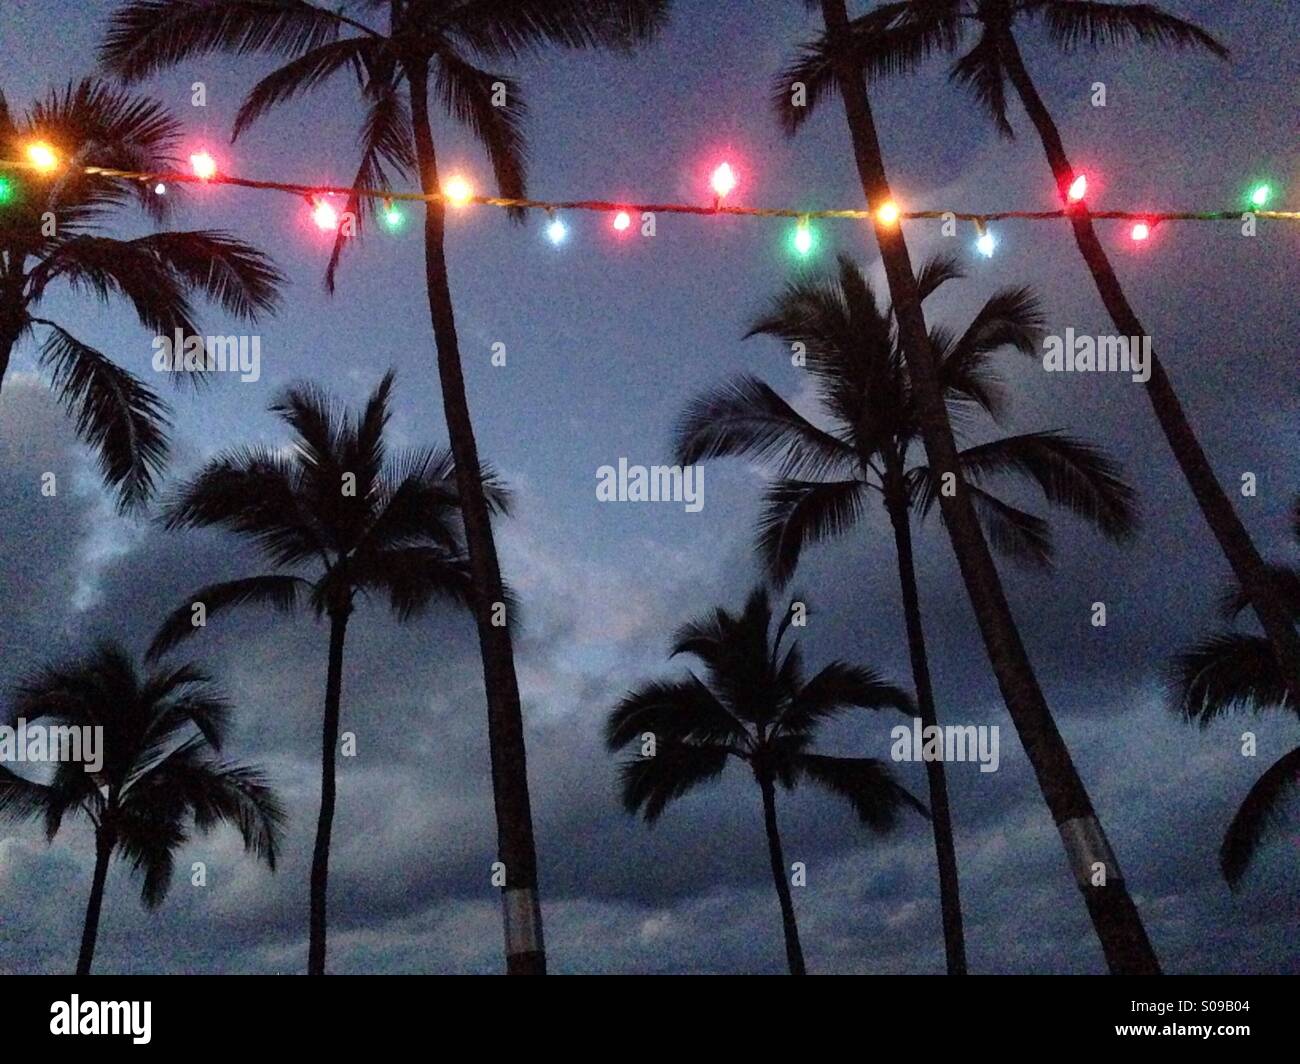 Mele Kalikimaka desde Hawai en Navidad Foto de stock